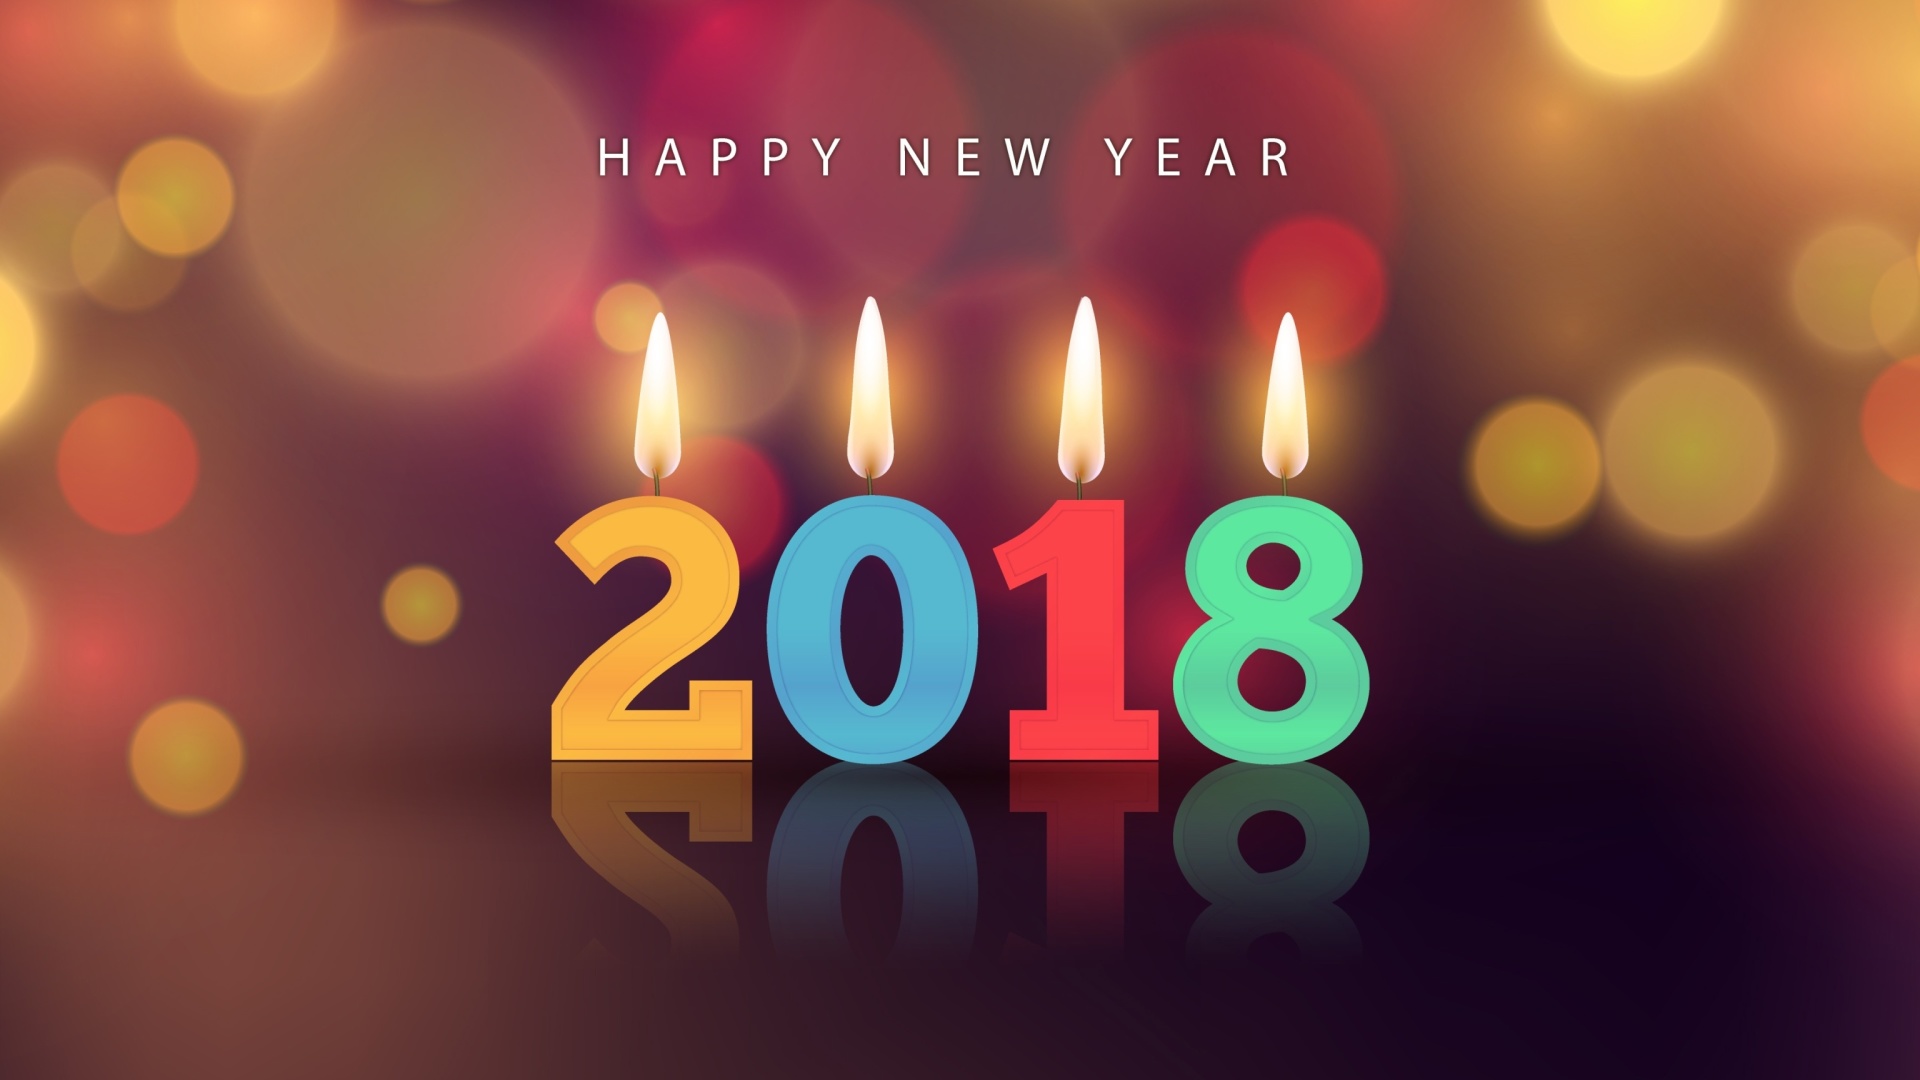 Обои New Year 2018 Greetings Card with Candles 1920x1080